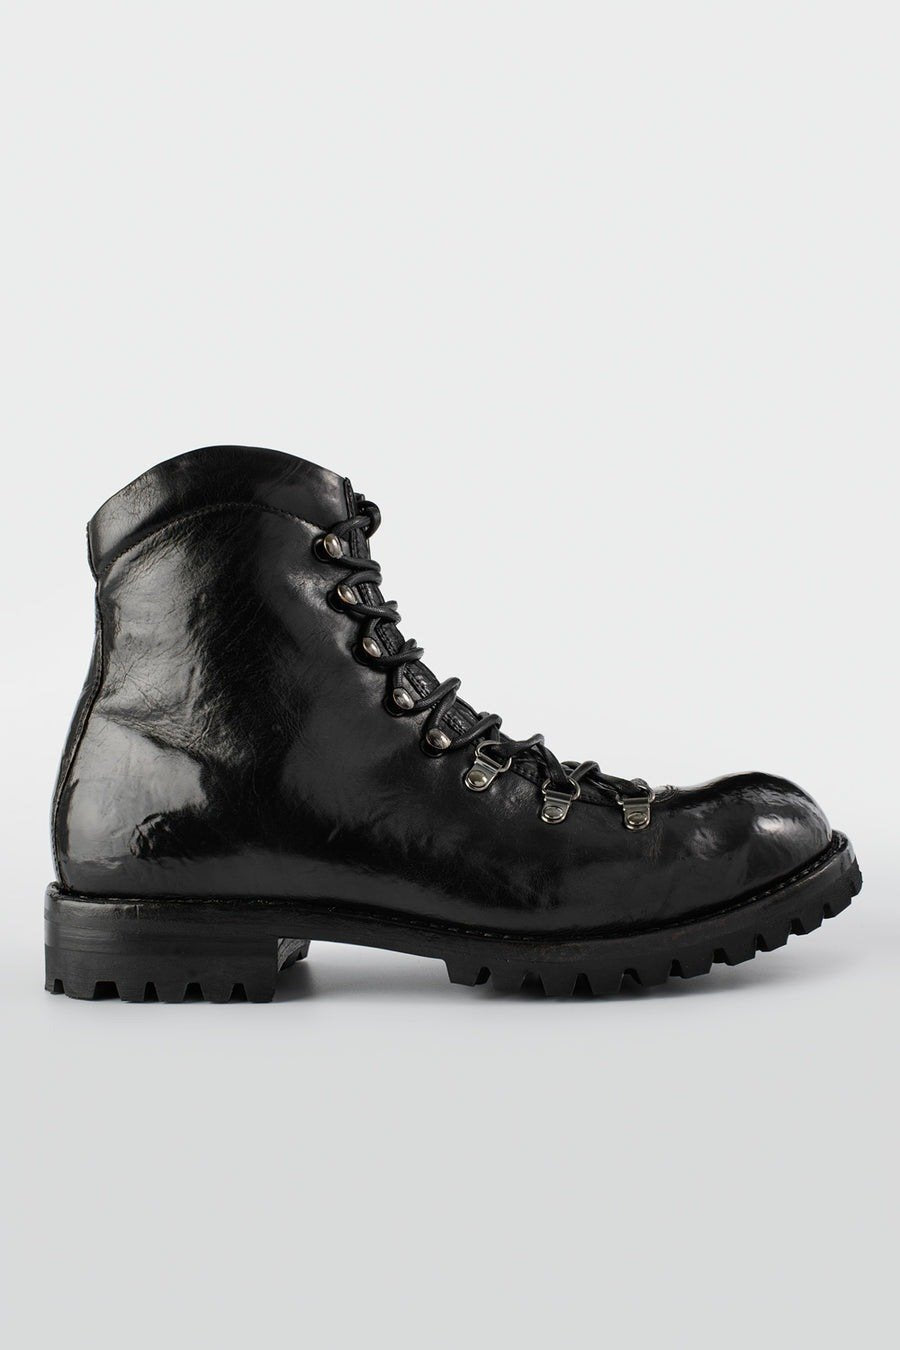 CAMDEN tar-black combat boots